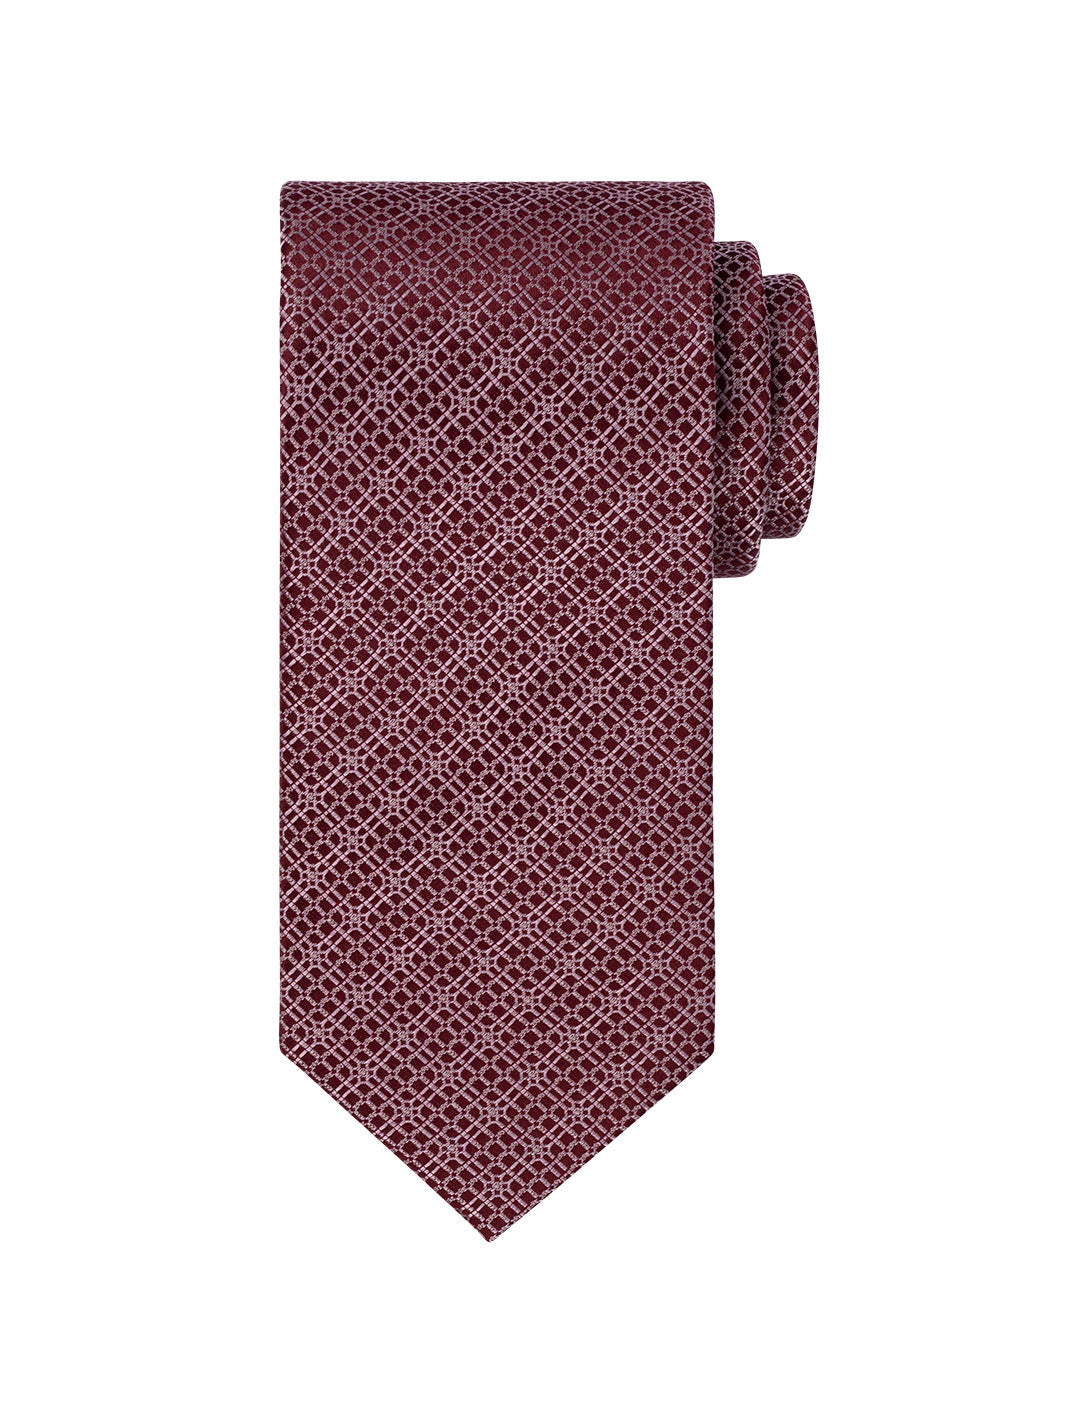 Mosaic Tie in Purple